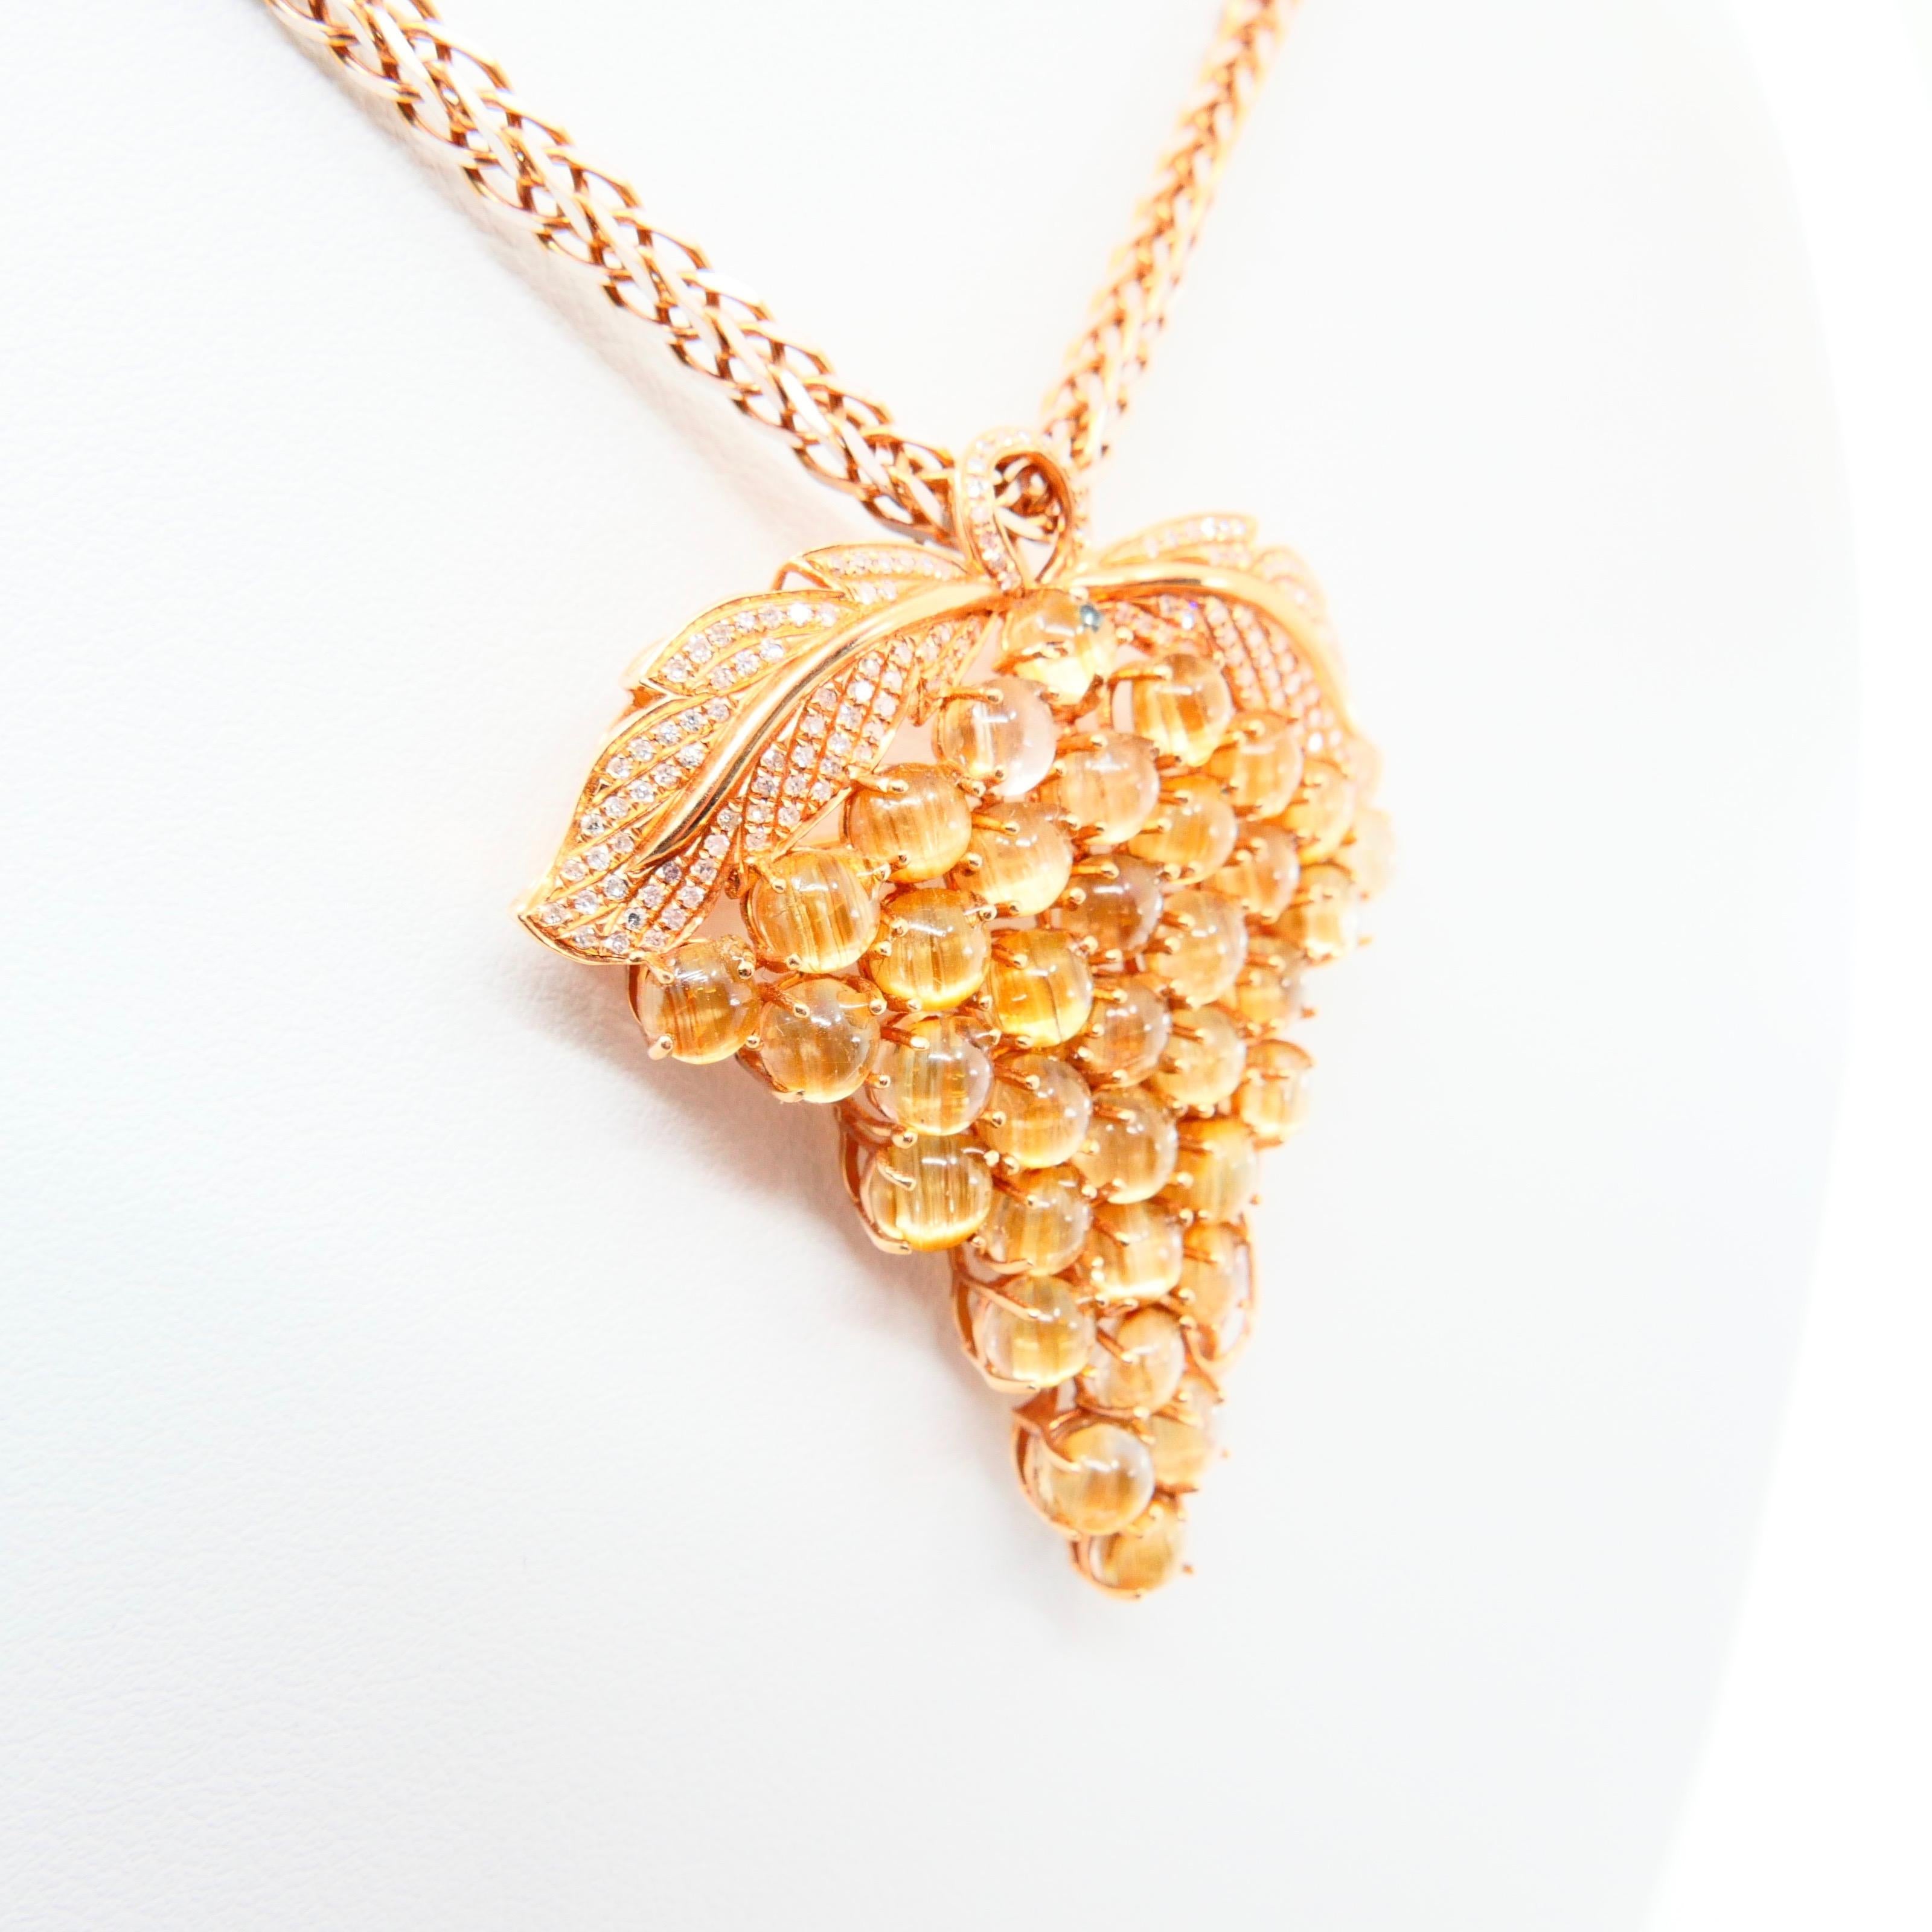 Round Cut Natural Golden Rutile Quartz Gemstone and Diamond Brooch / Pendant Necklace For Sale